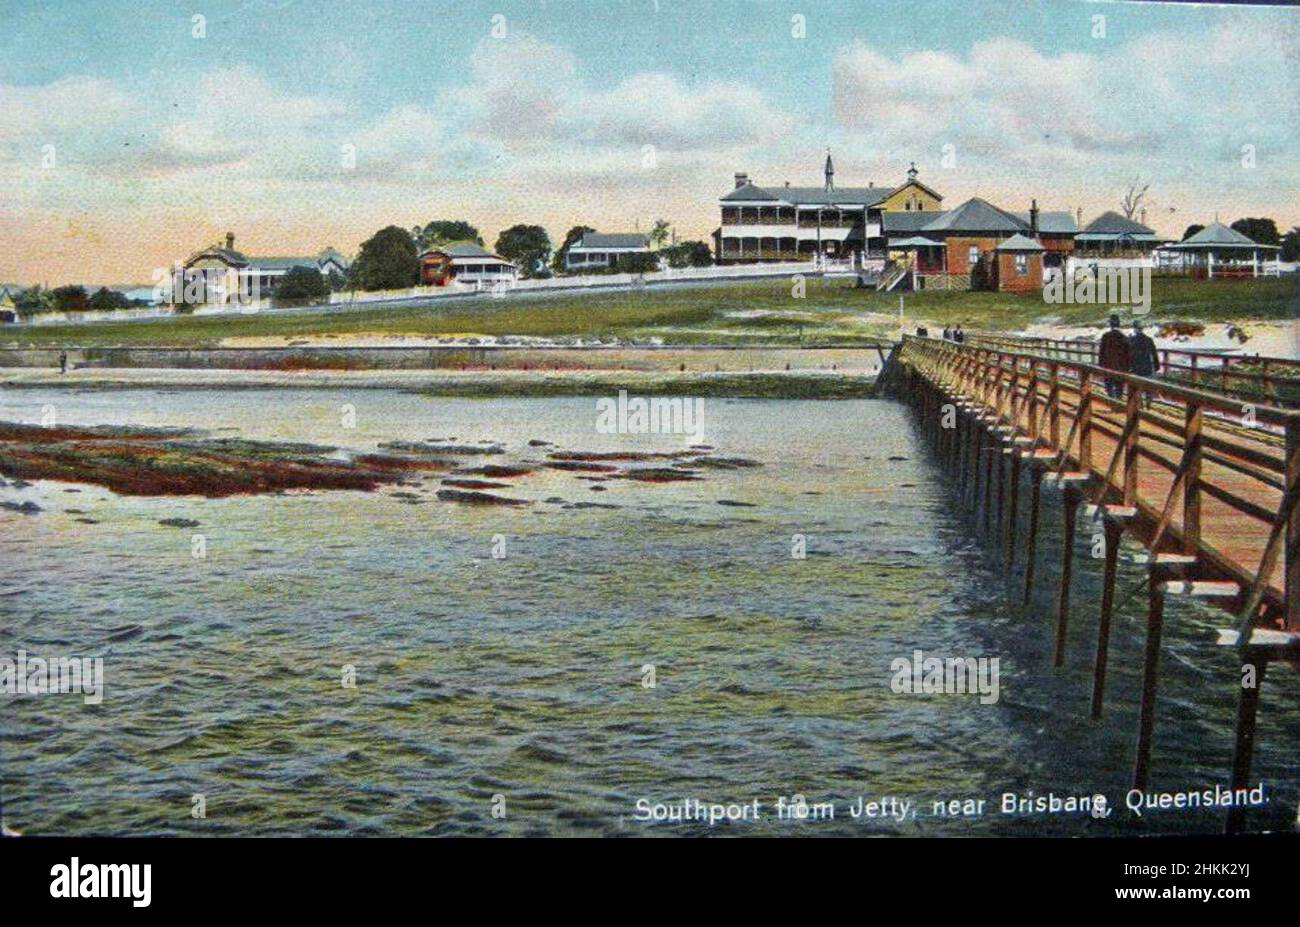 Southport from Jetty, near Brisbane, Queensland, Australia - circa 1910 Stock Photo